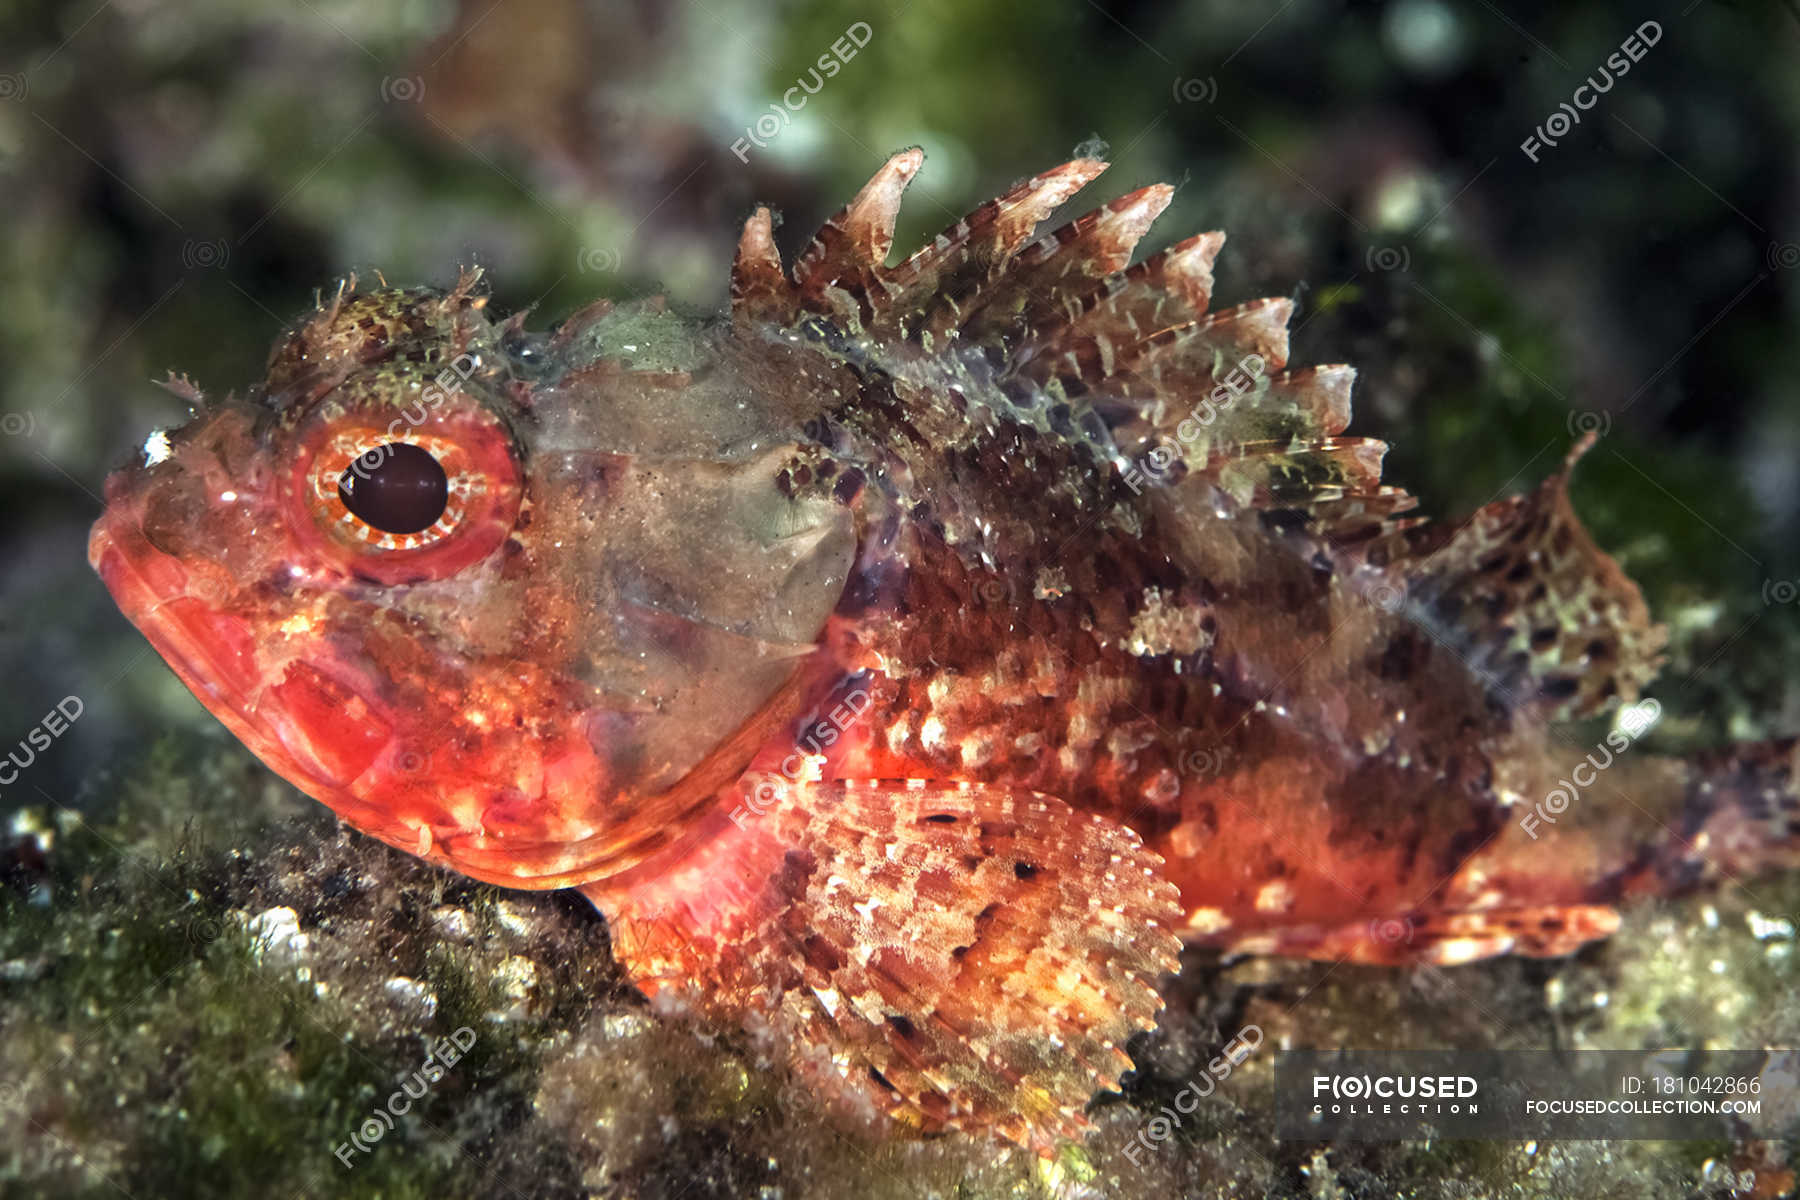 red scorpion fish